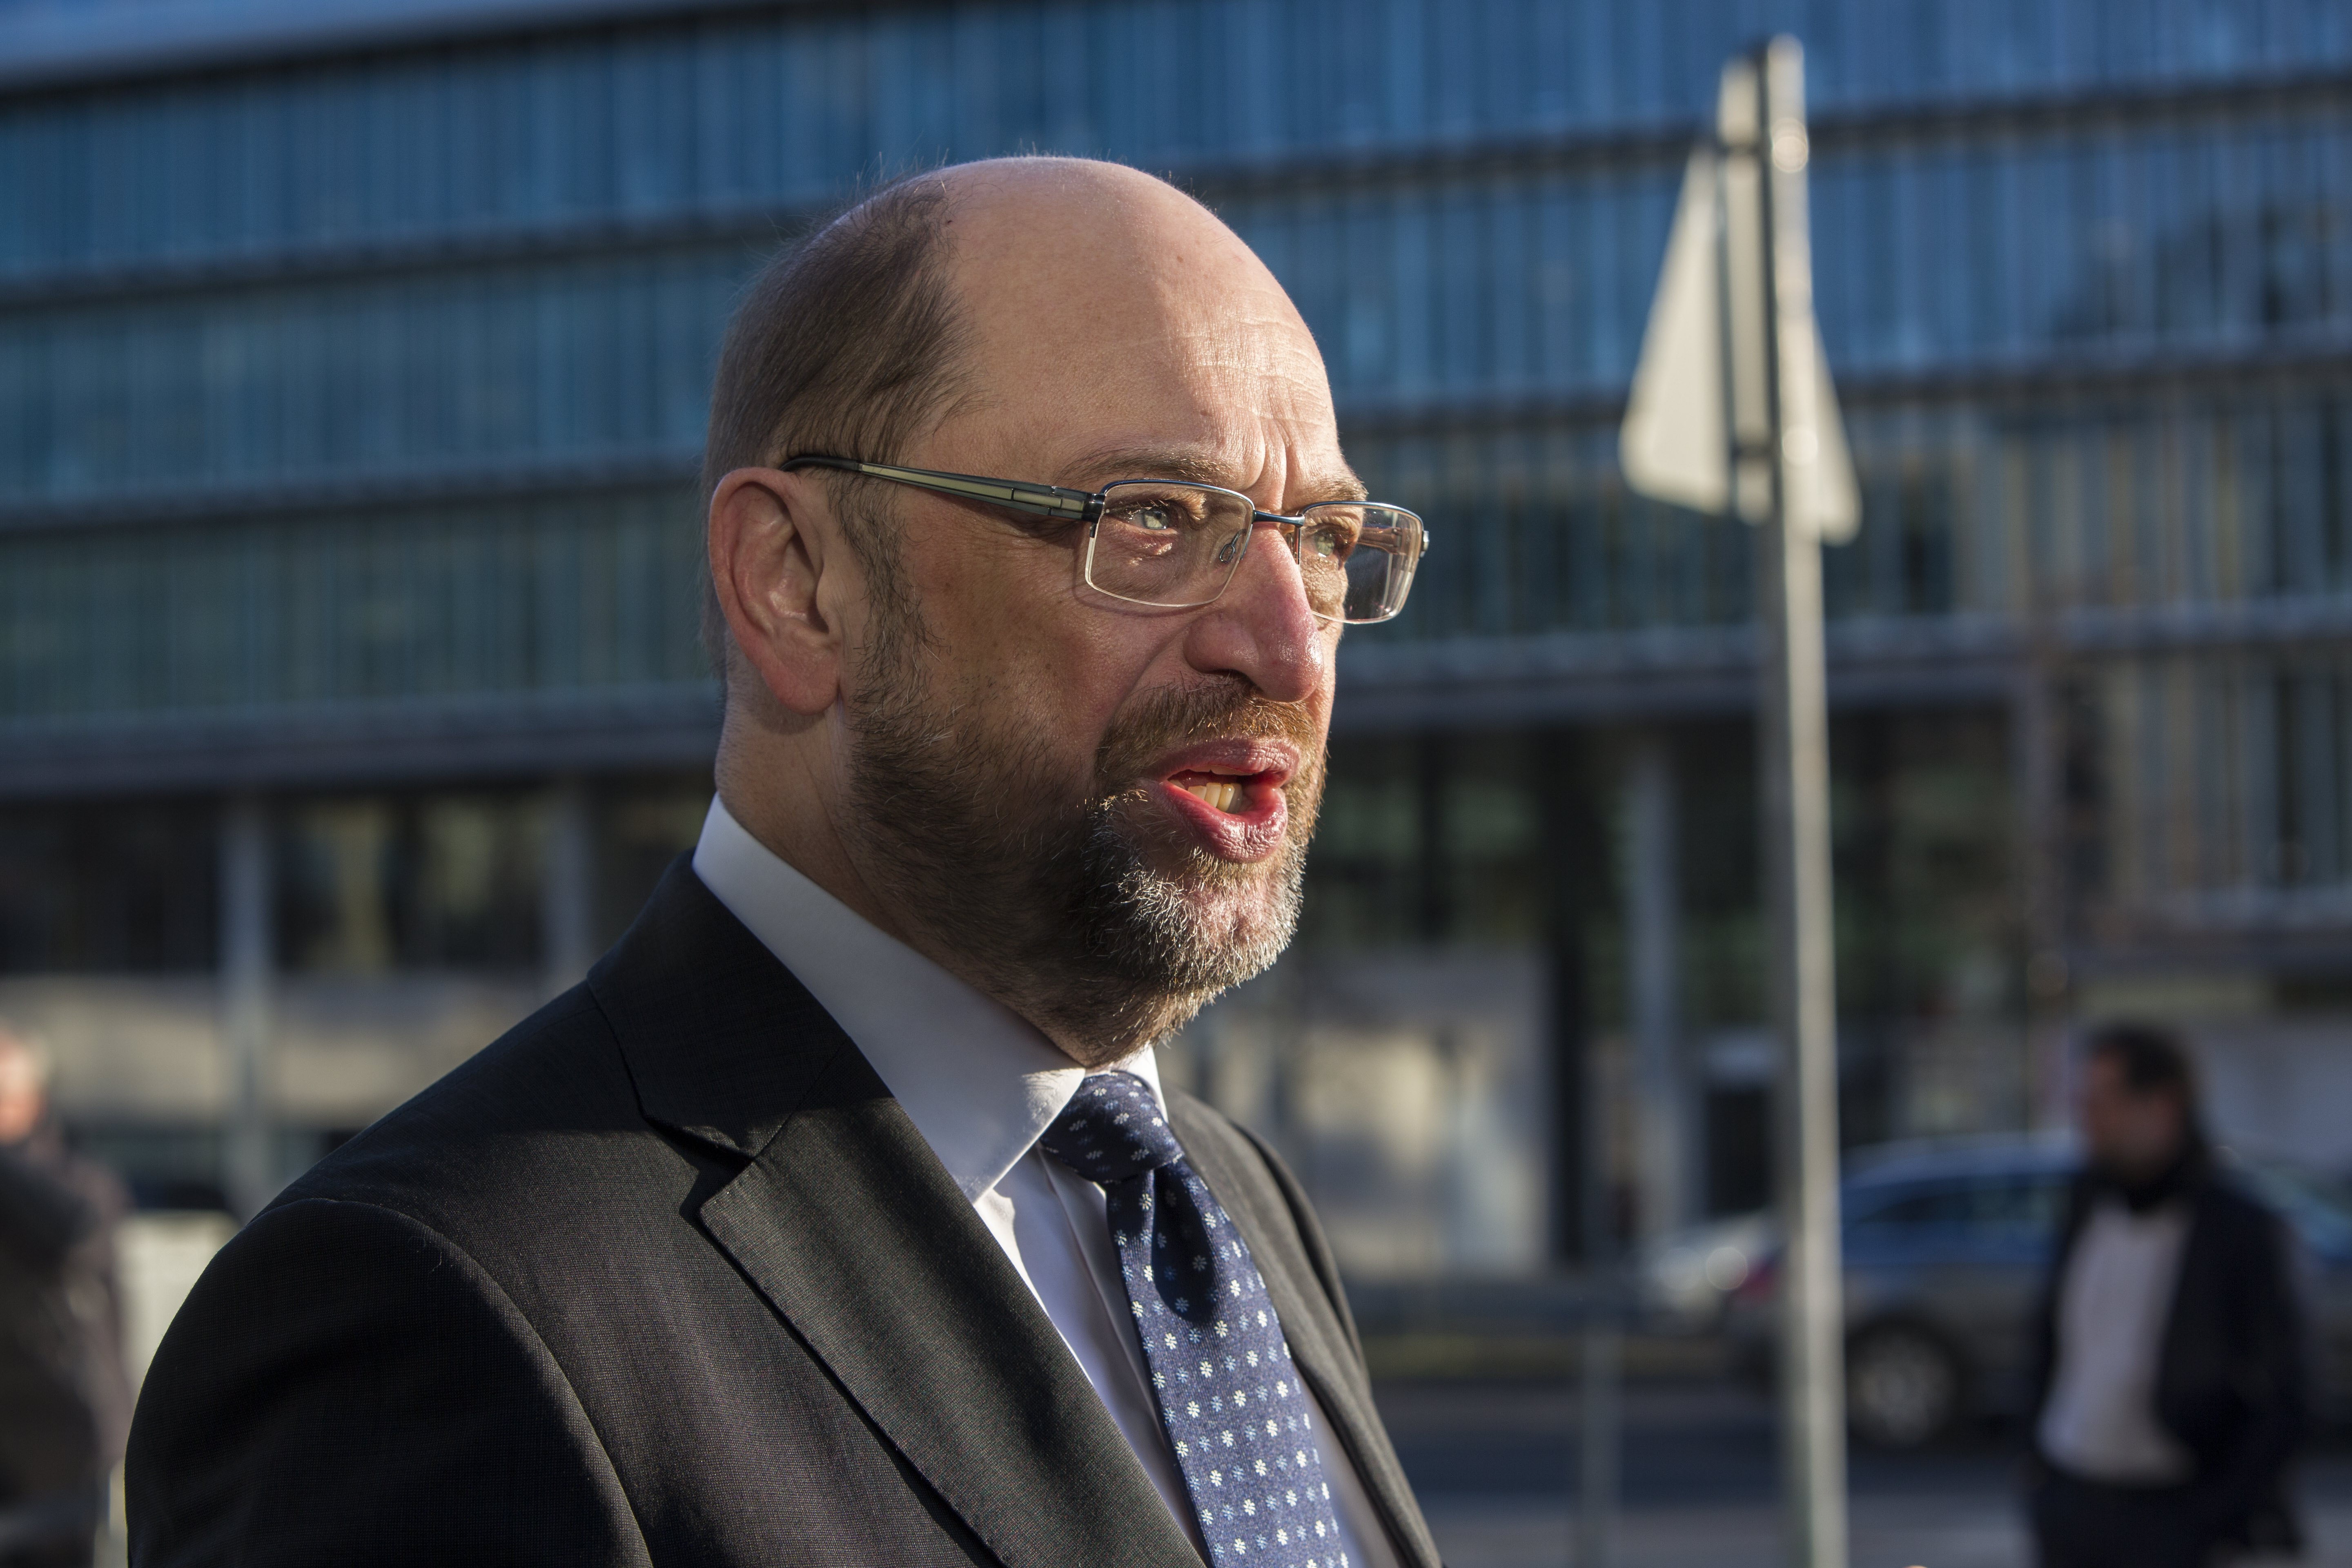 Martin Schulz: ‘Bailout programmes were never just’